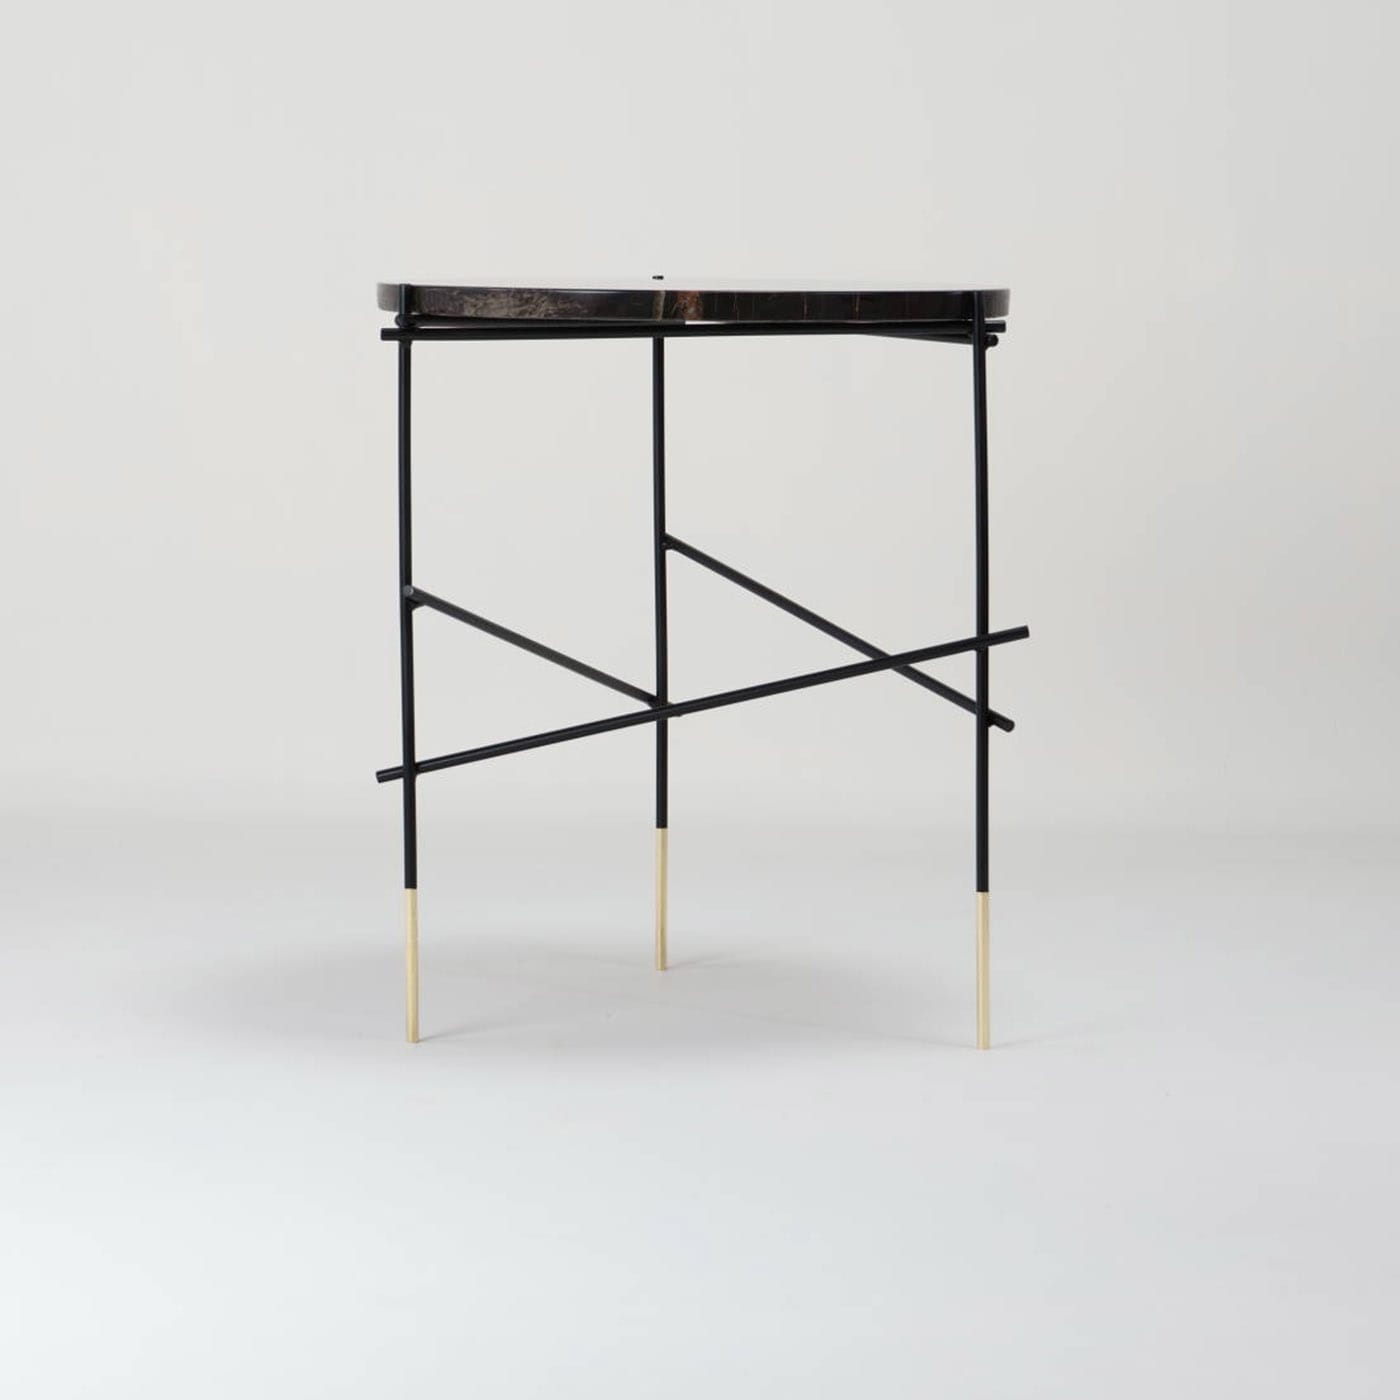 StiltS Sahara Noir Black Marble Side Table - DF DesignLab